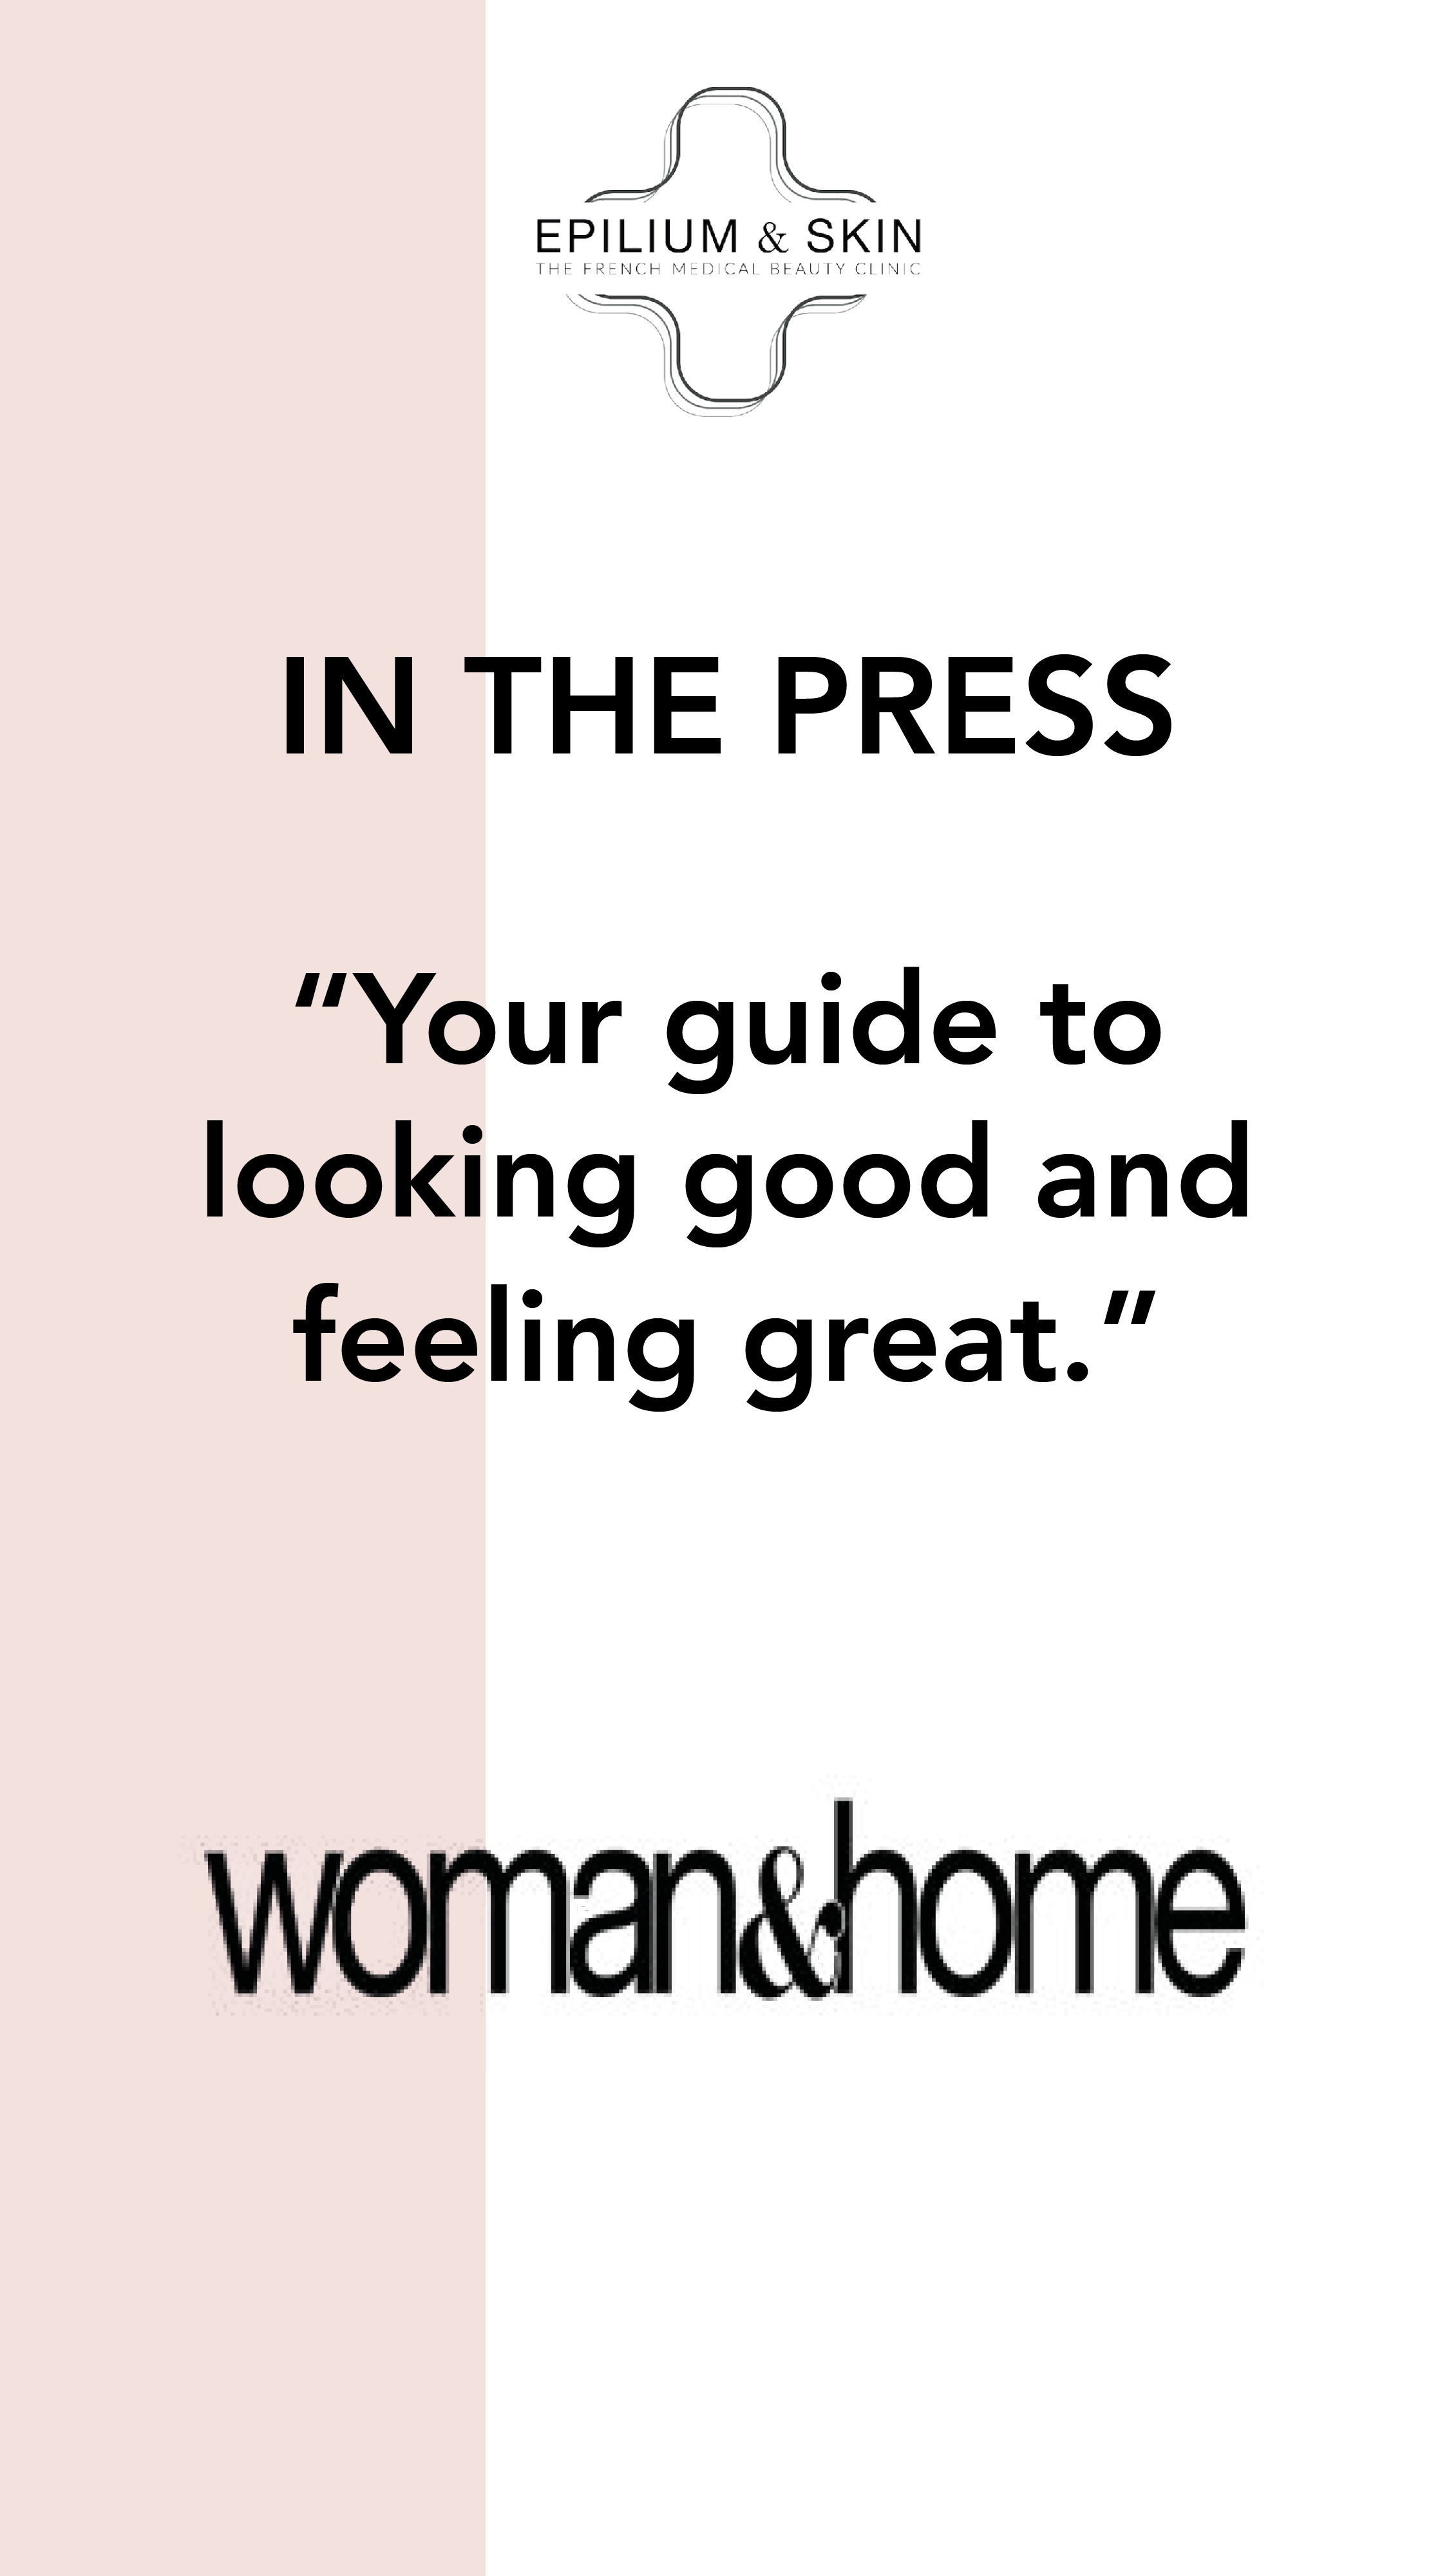 Woman&Home